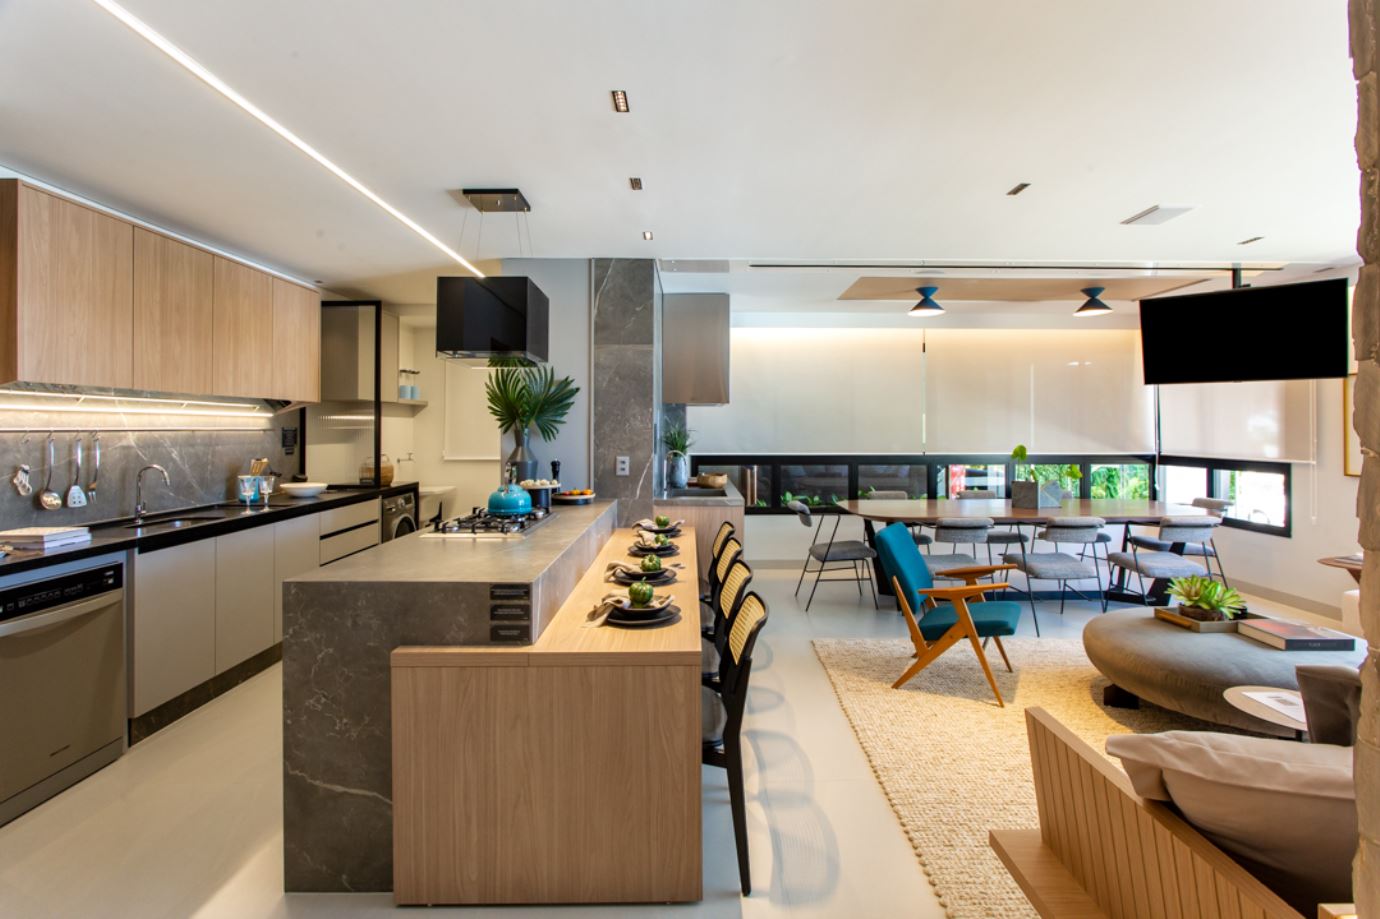 Living - cozinha aberta integrada a sala